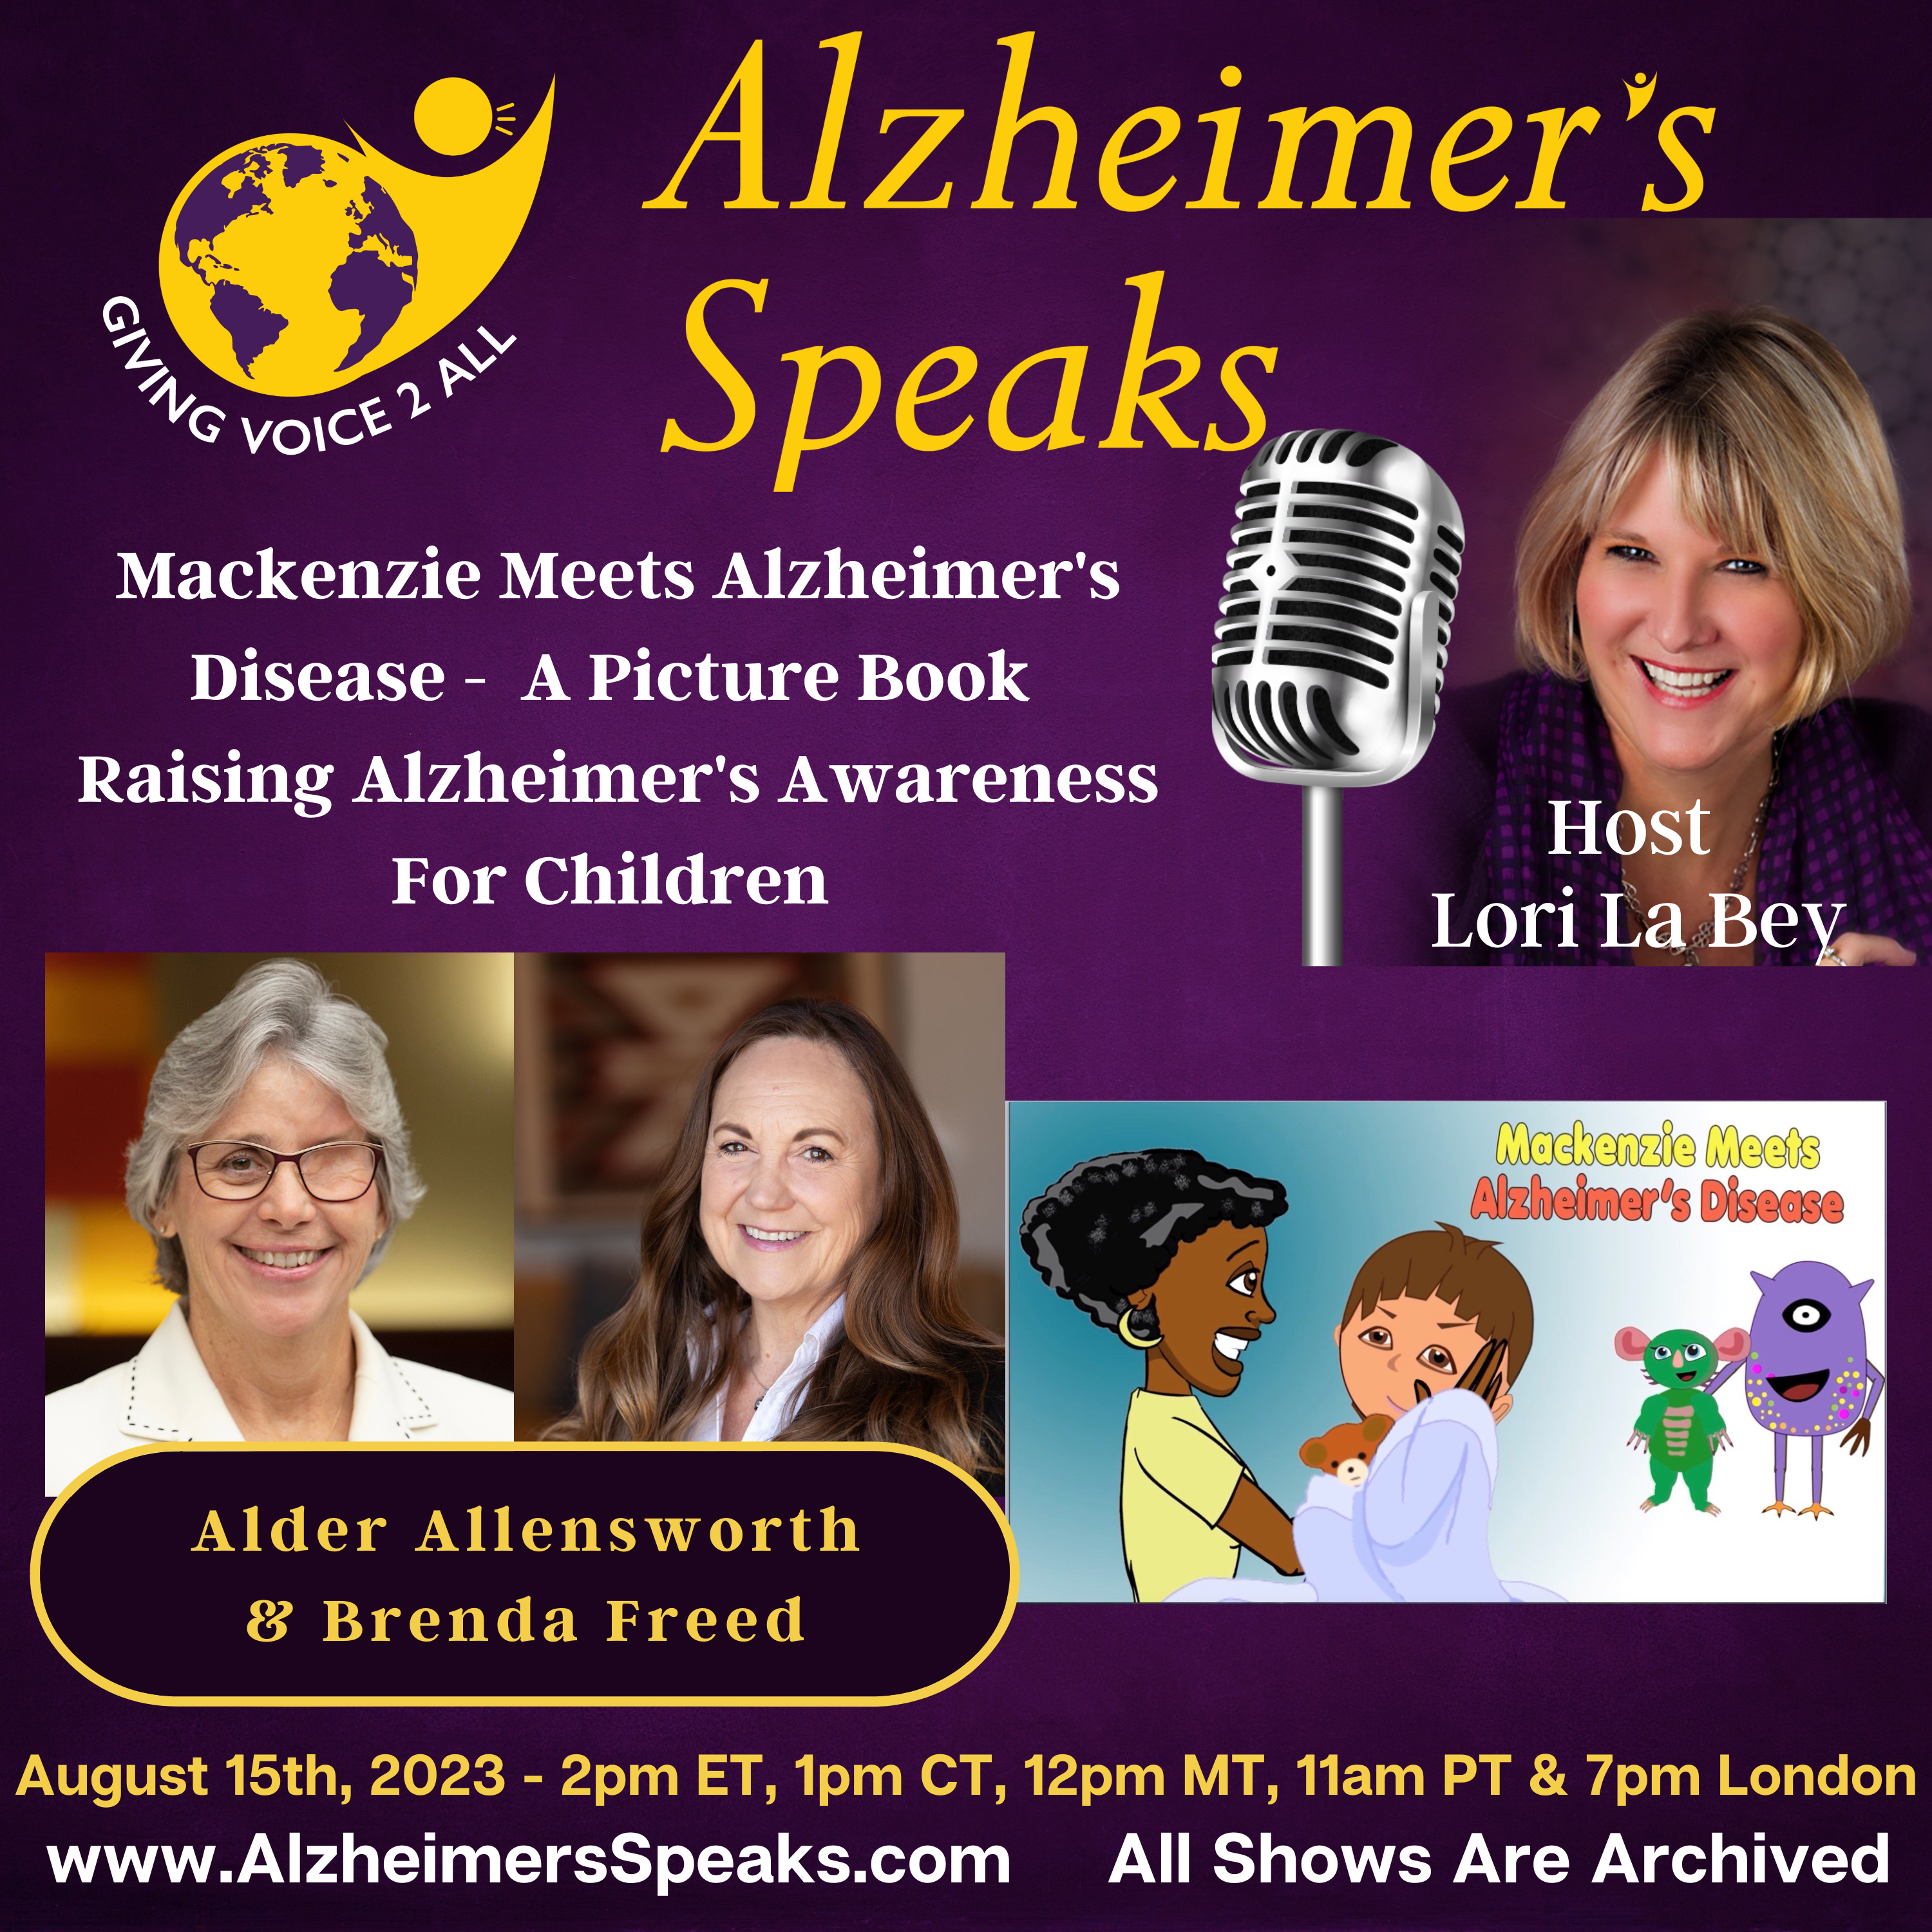 Mackenzie Meets Alzheimer's Disease - A Picture Book for Children